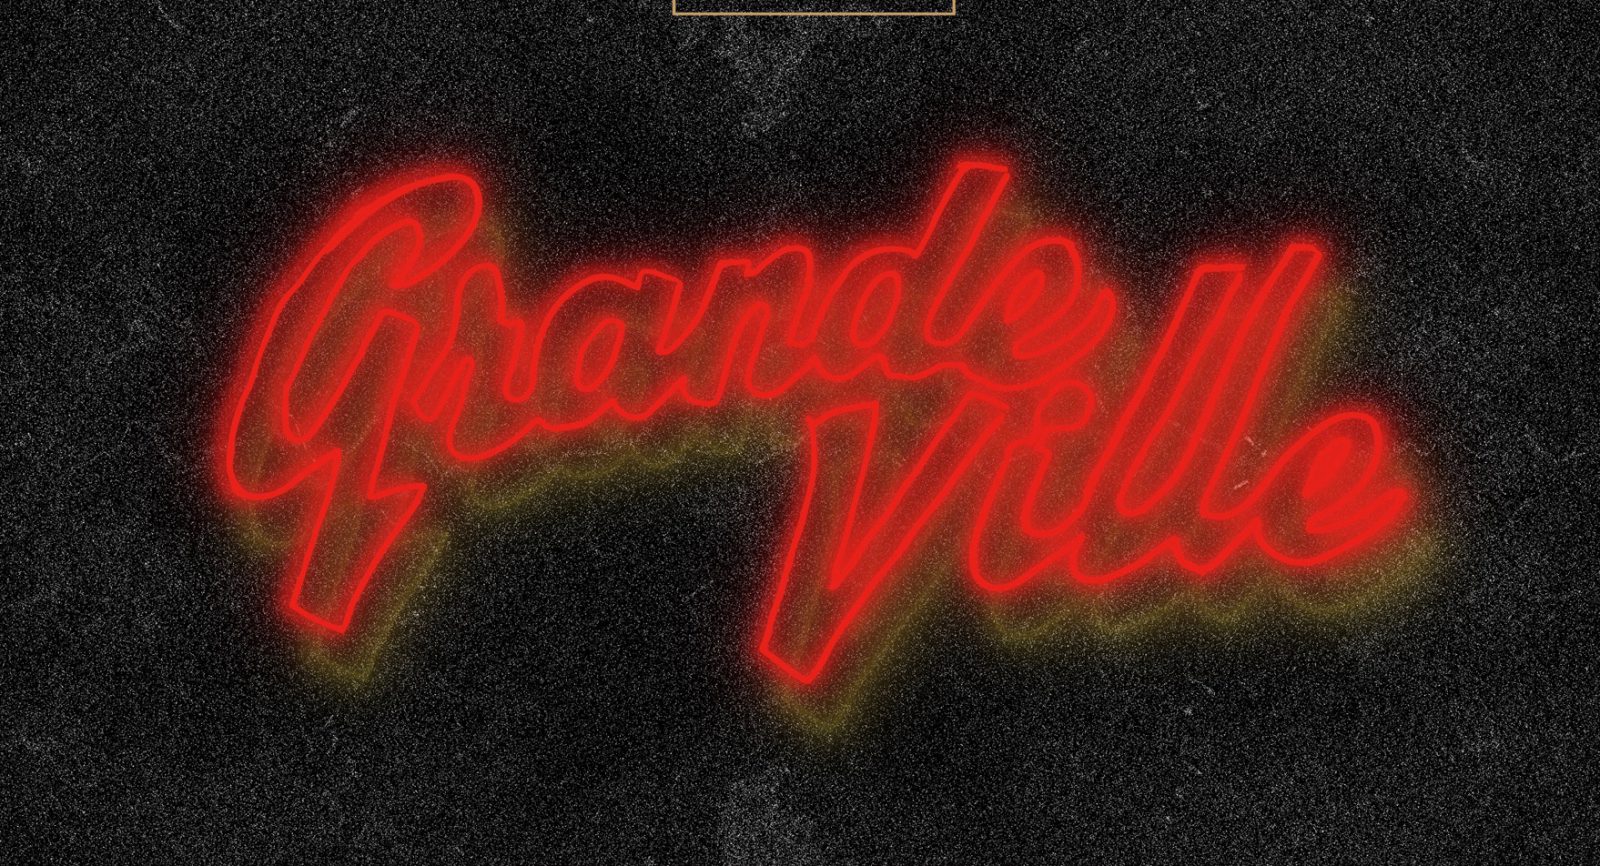 Grande Ville Records Label Party